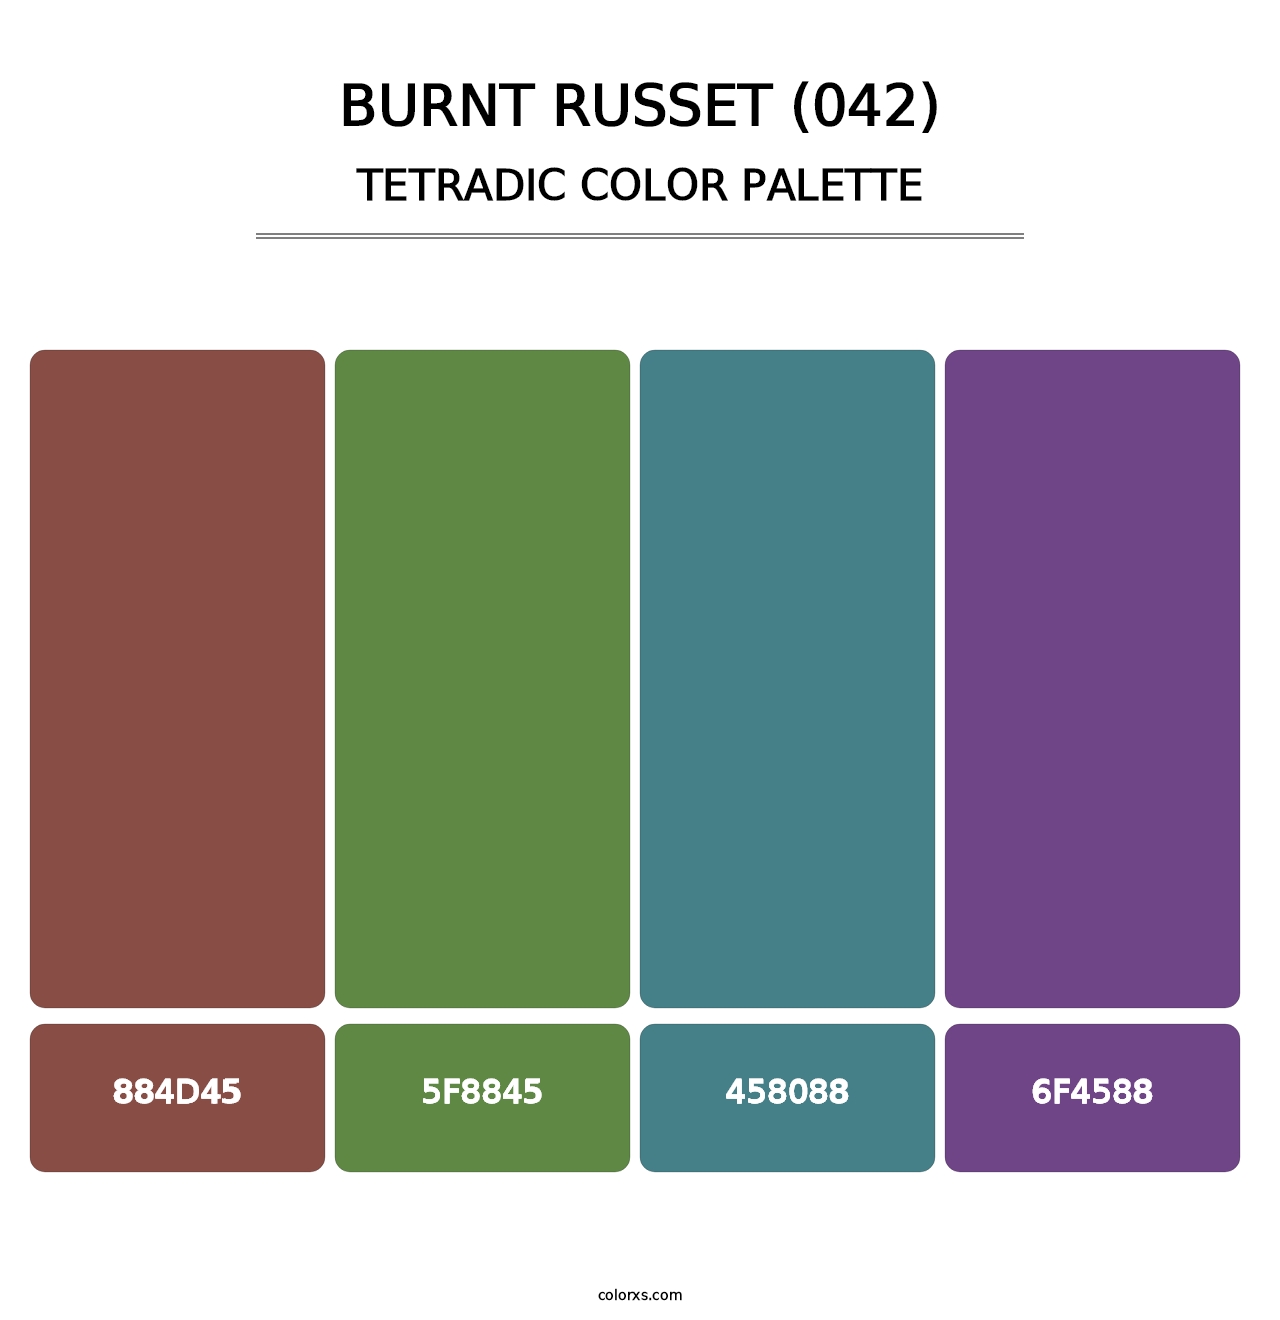 Burnt Russet (042) - Tetradic Color Palette